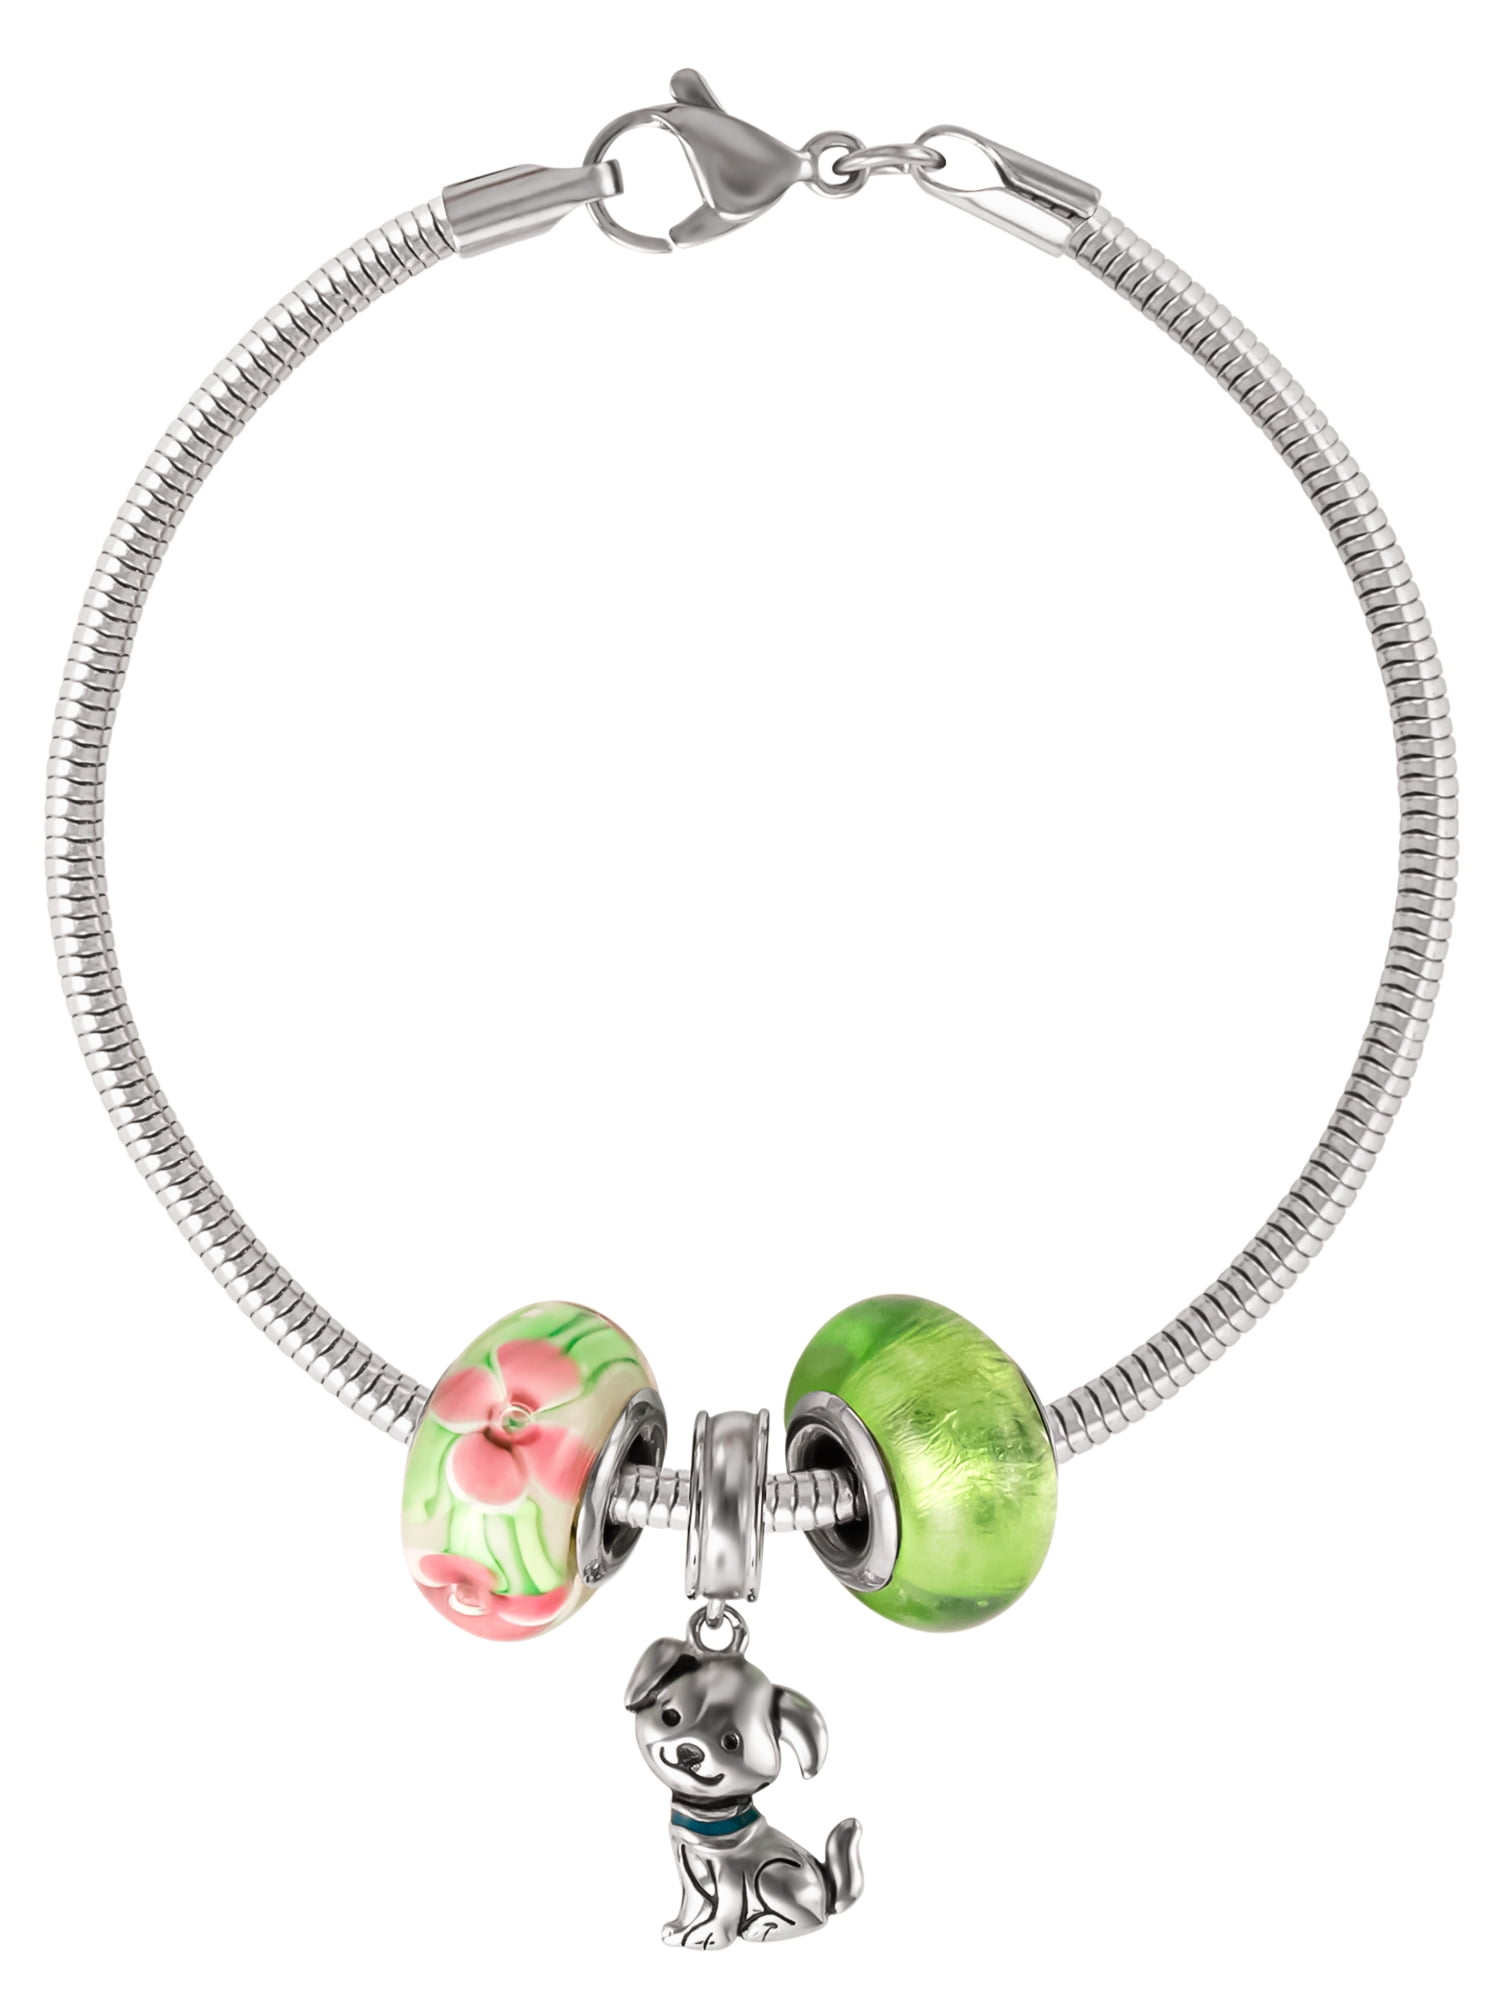 Artwork Store Adjustable Silver Bracelets Sheep Head Skulls and Flowers Charming Fashion Chain Link Bracelets Jewelry for Women